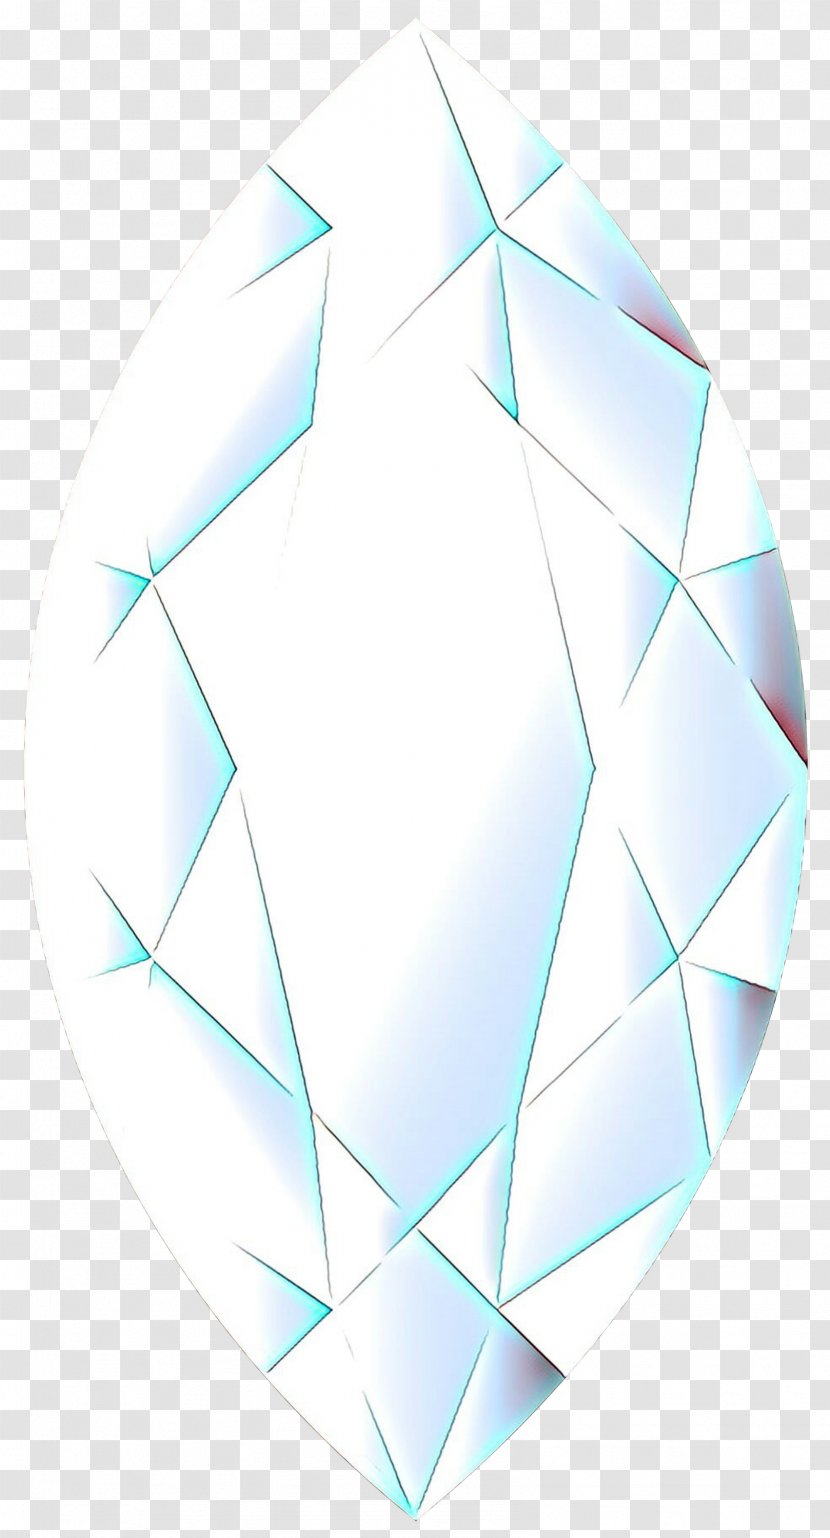 Triangle Background - Turquoise Aqua Transparent PNG